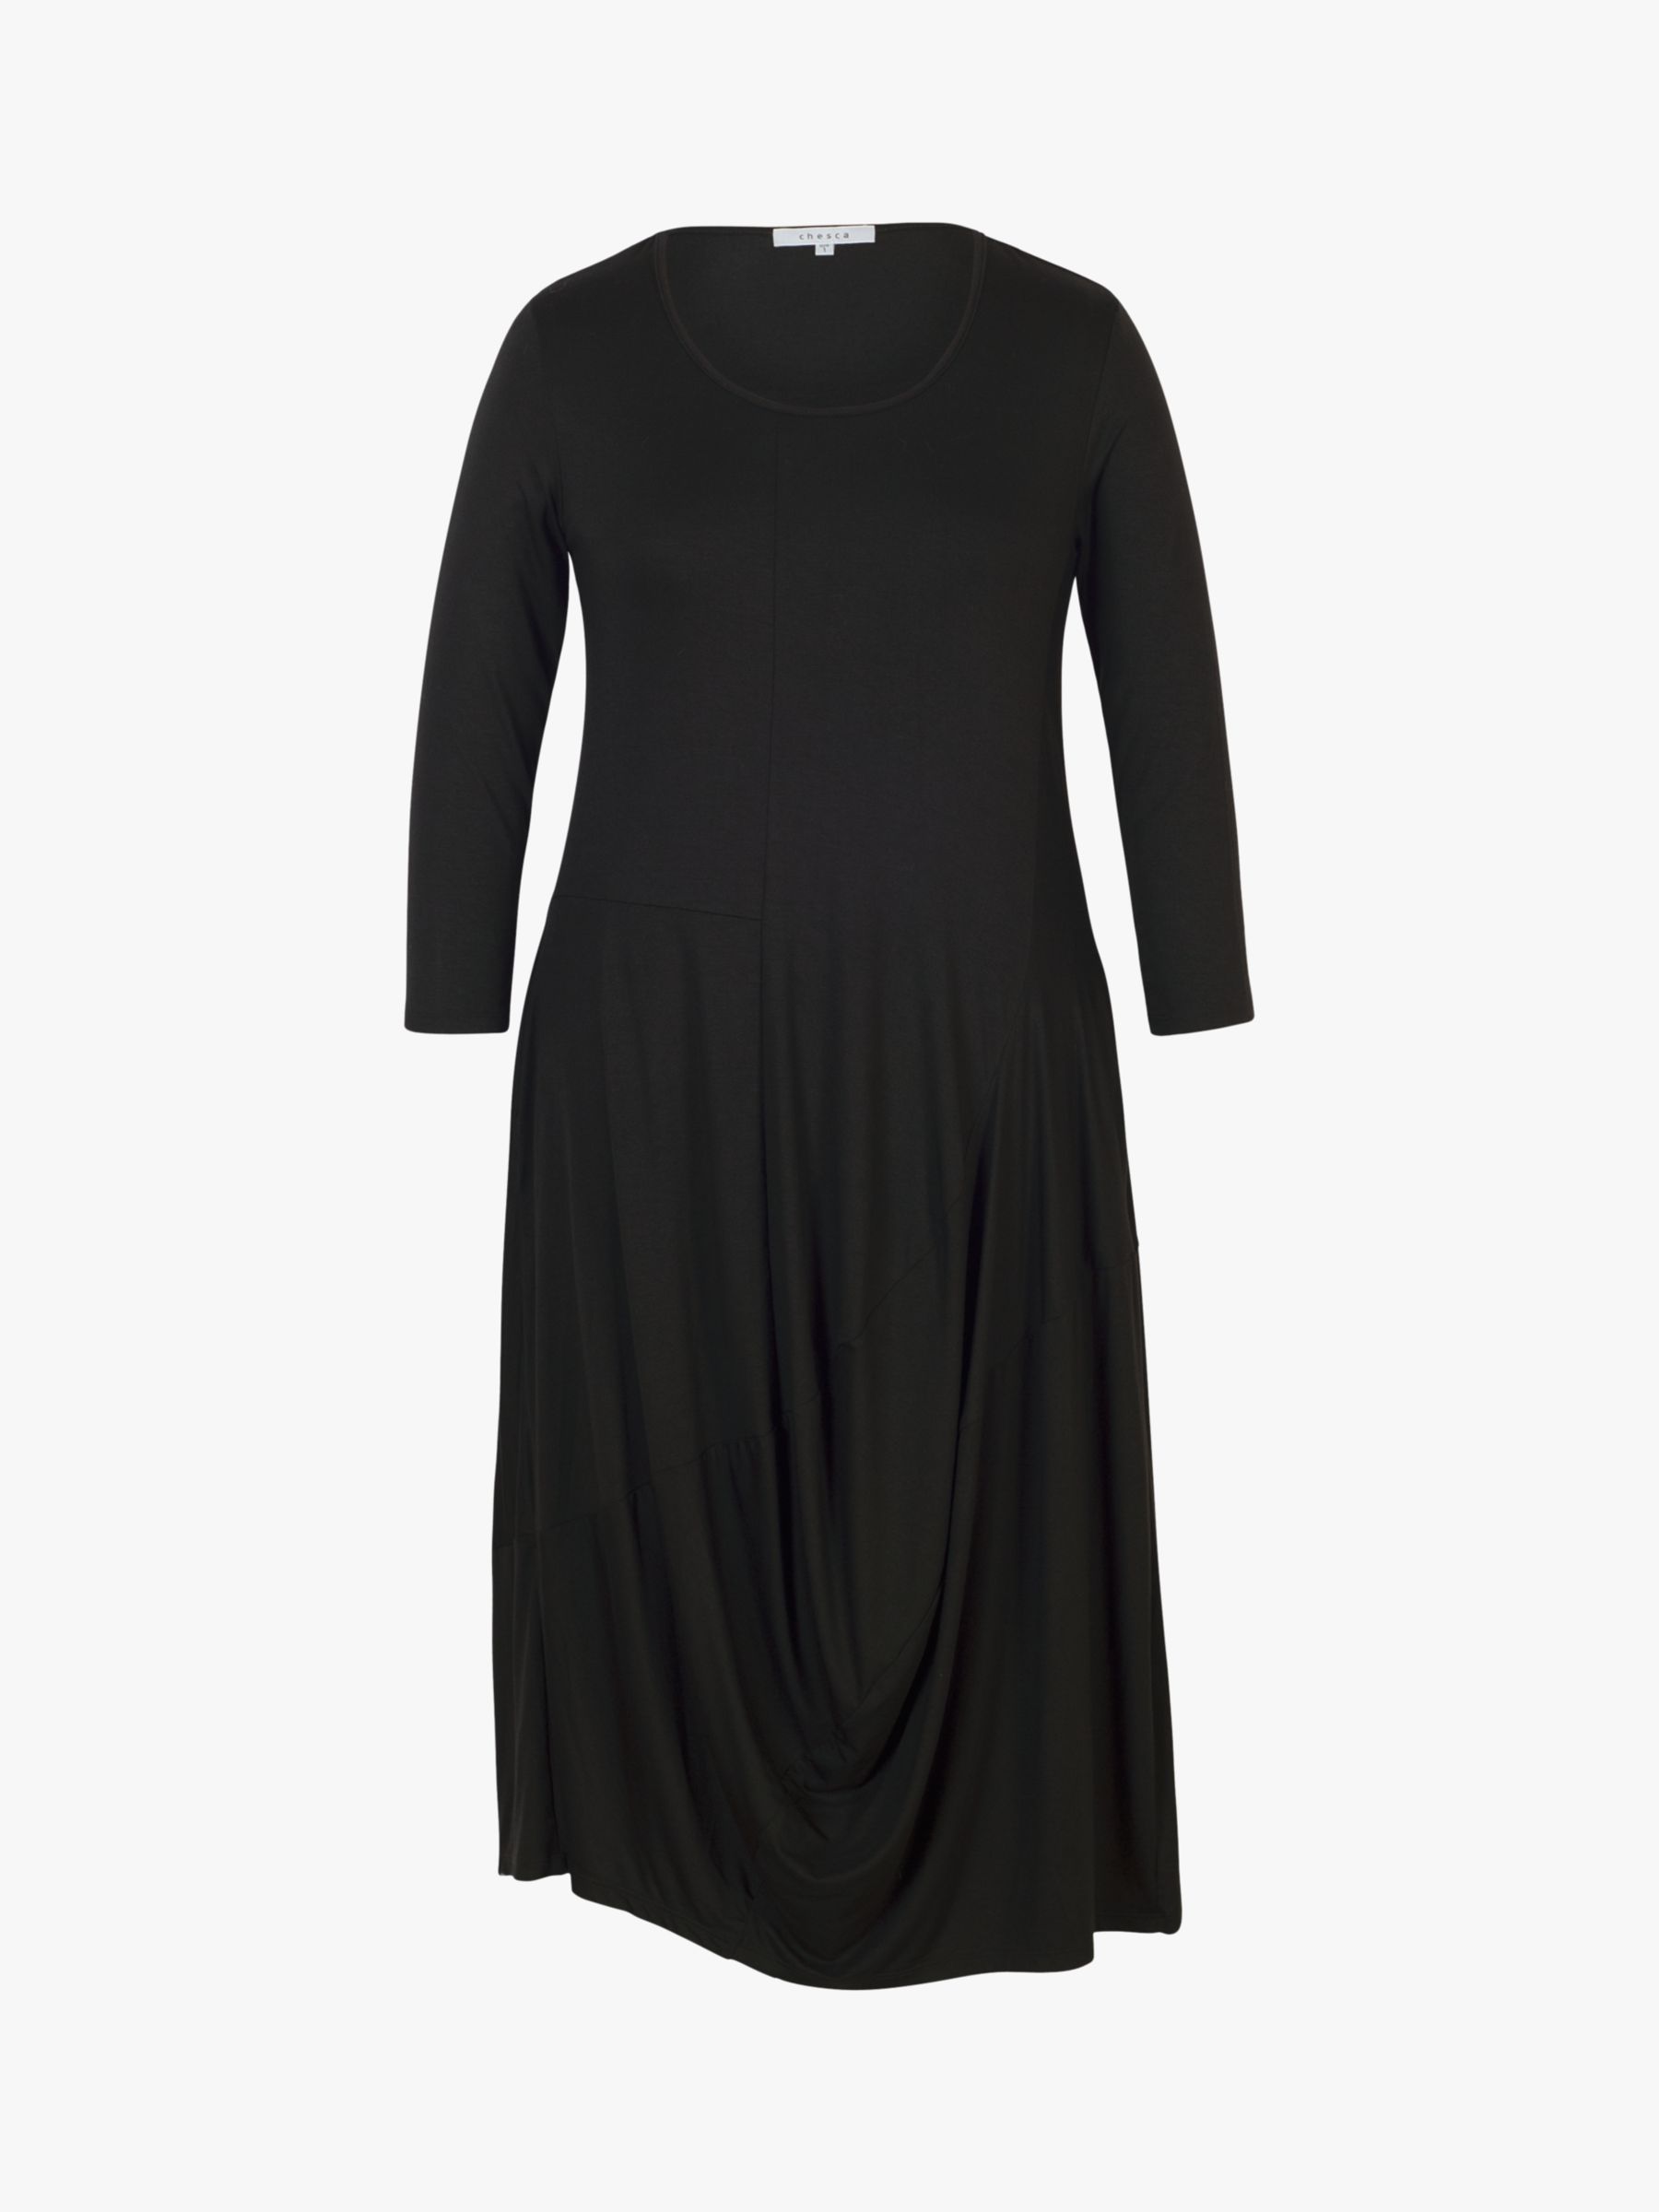 chesca Draped Jersey Dress, Black at John Lewis & Partners